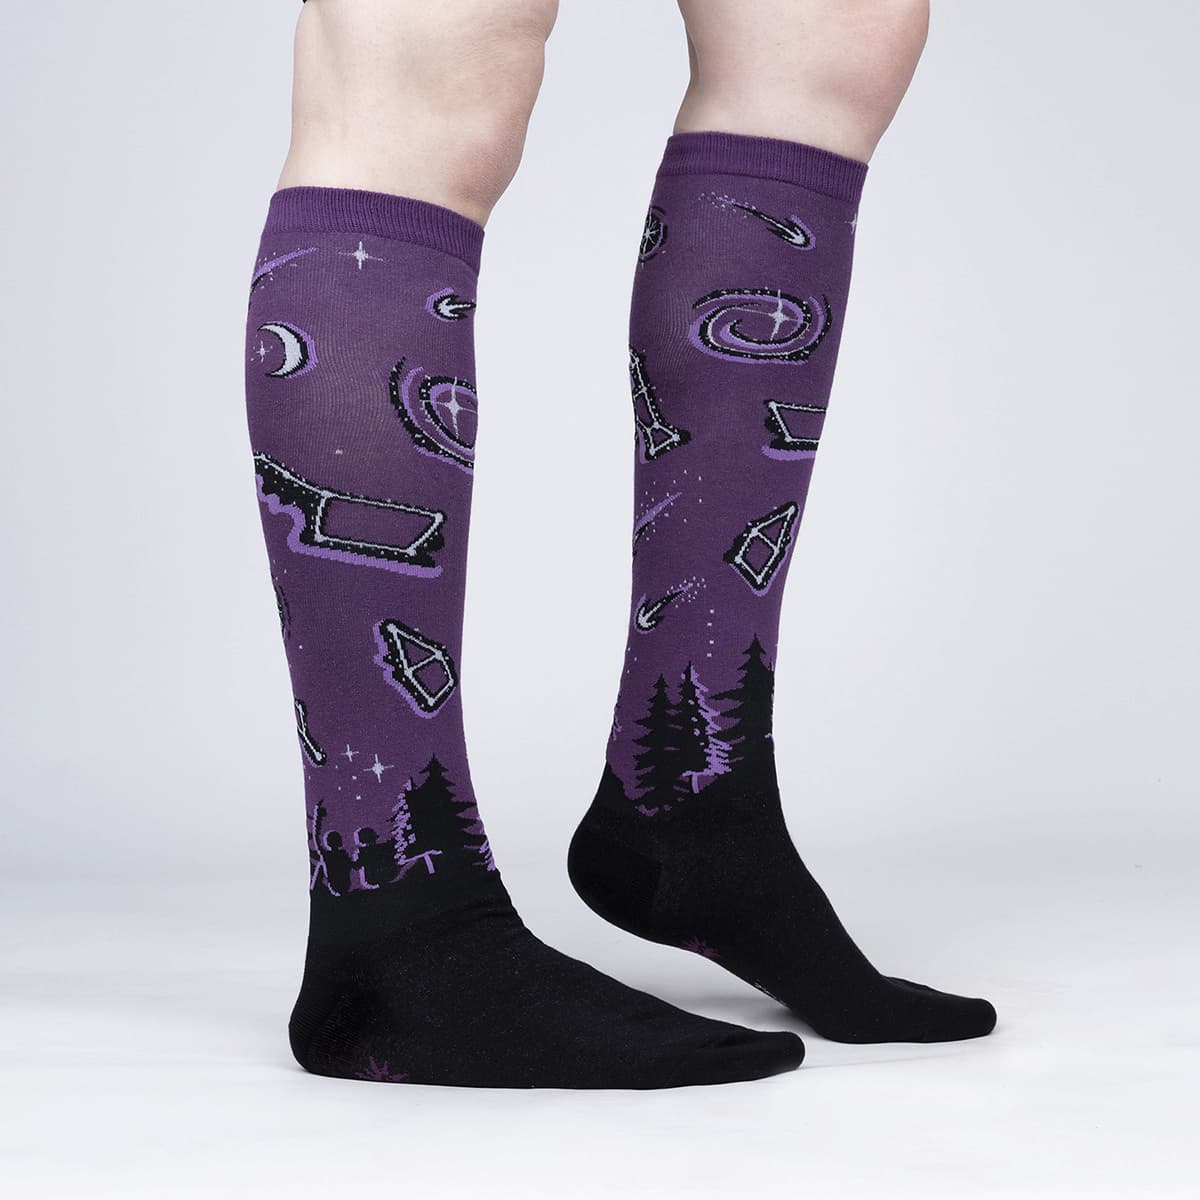 Make A Wish Women's Knee High Socks  - Glow in the Dark